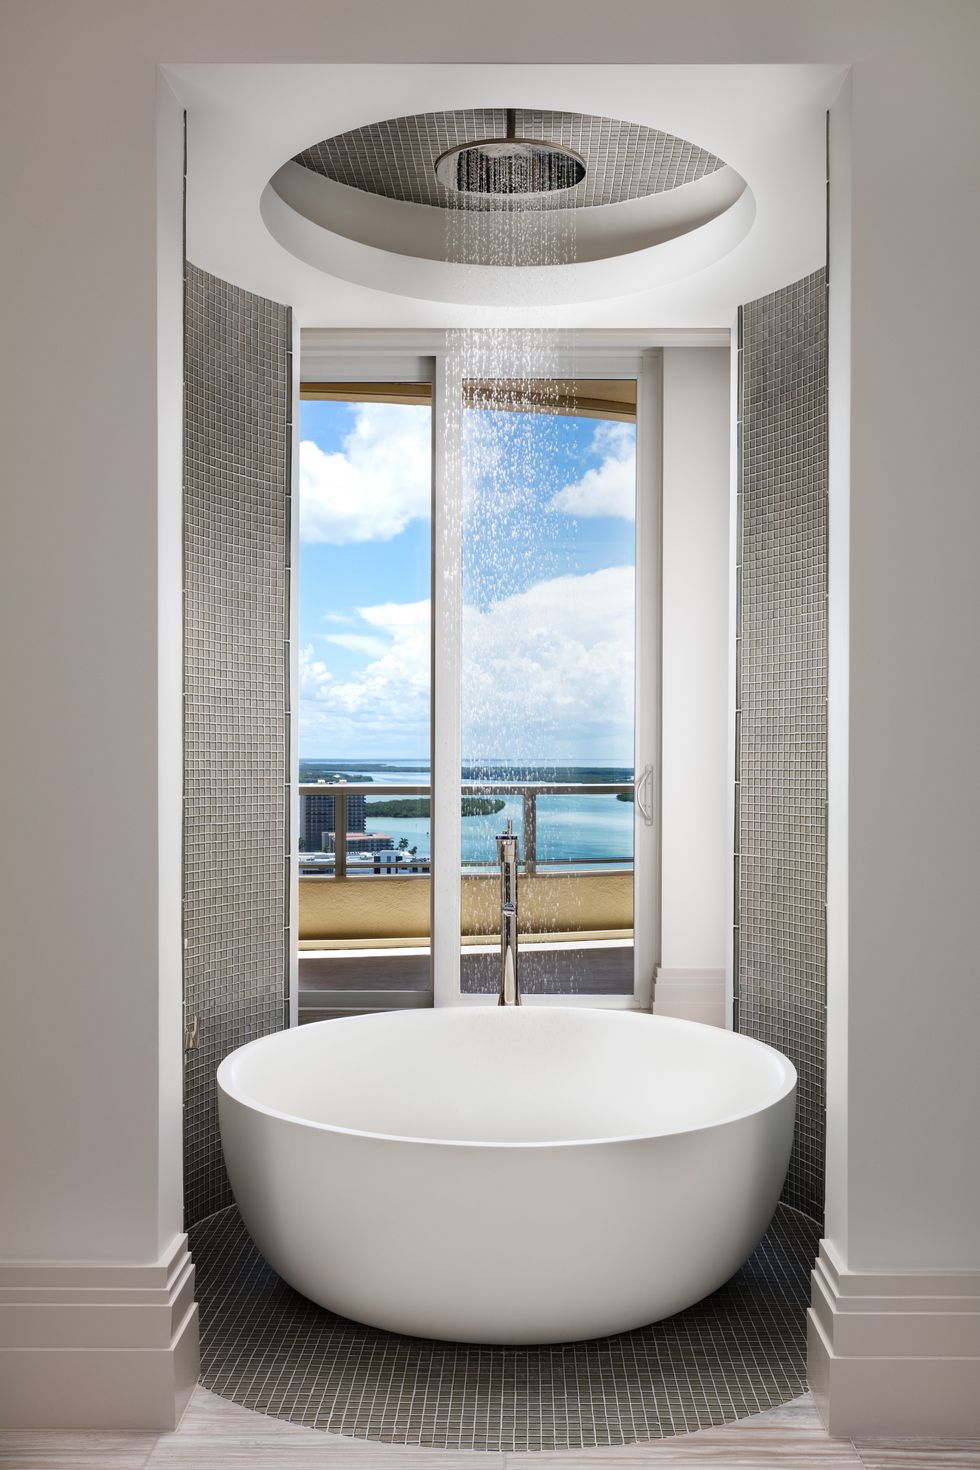 Luxury Bathrooms Add Comfort and Beauty